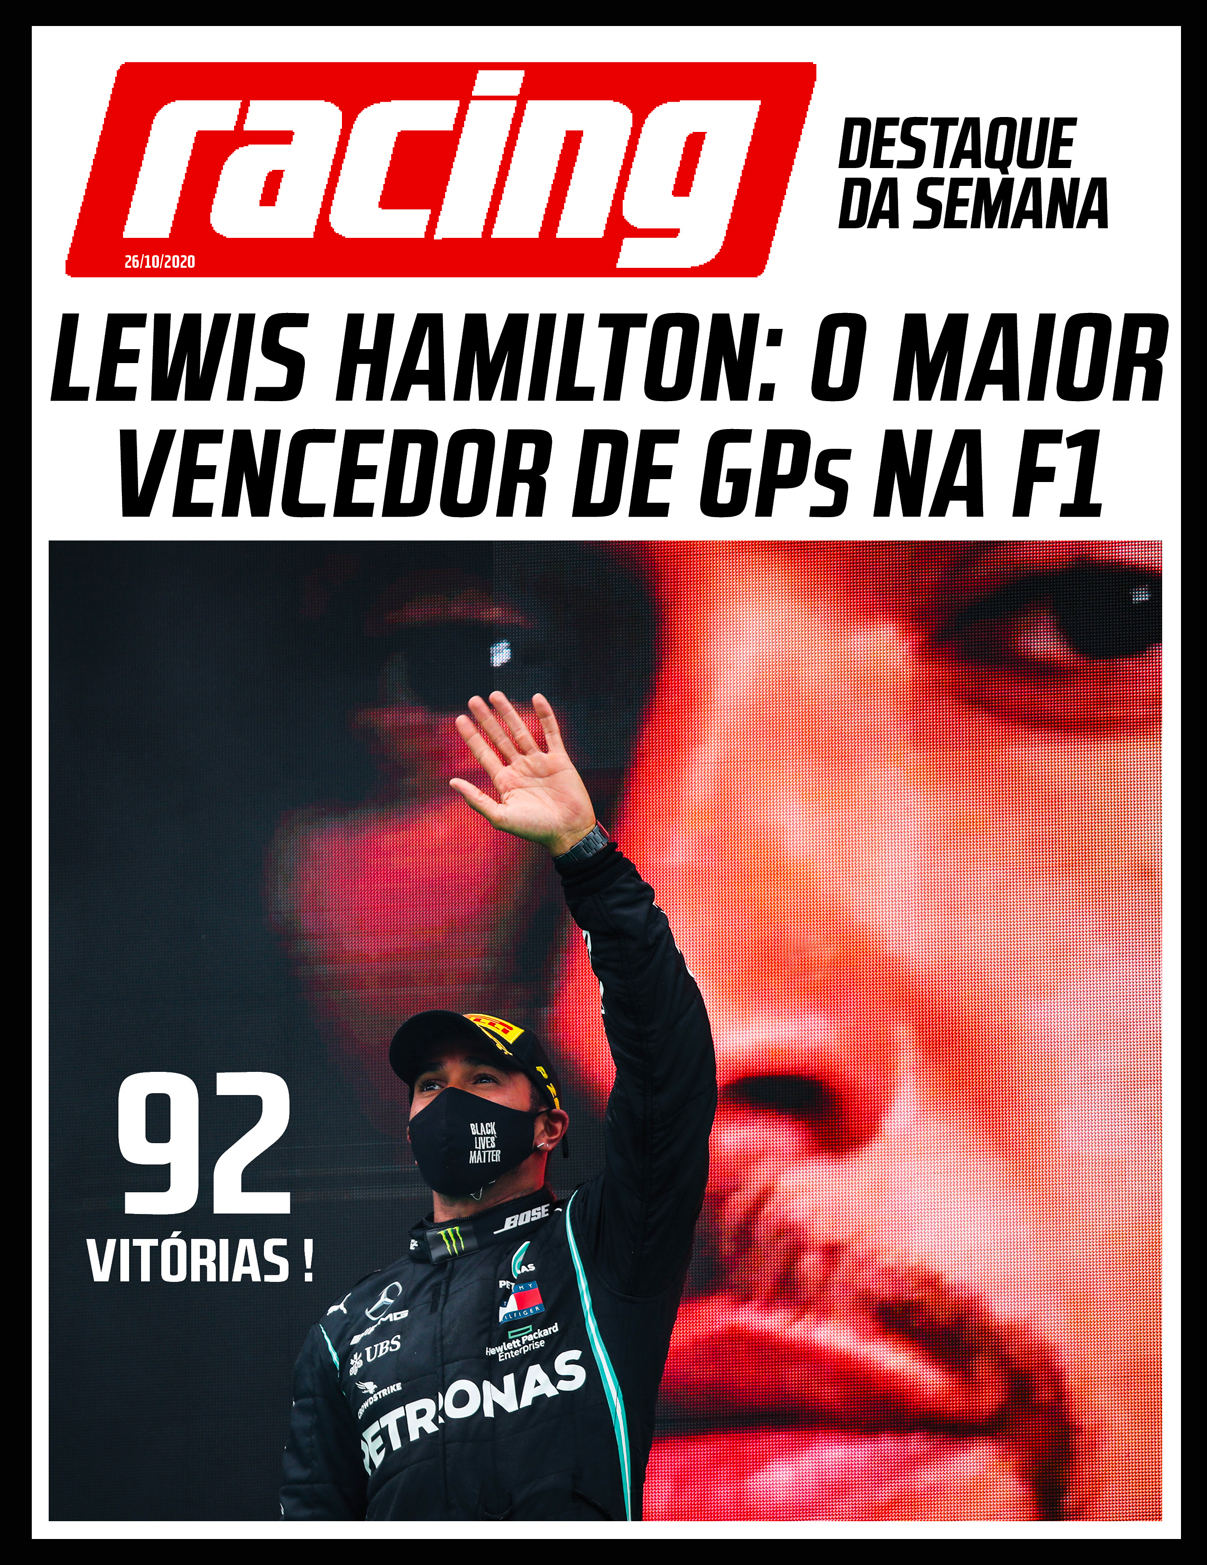 Lewis Hamilton 92 vitórias